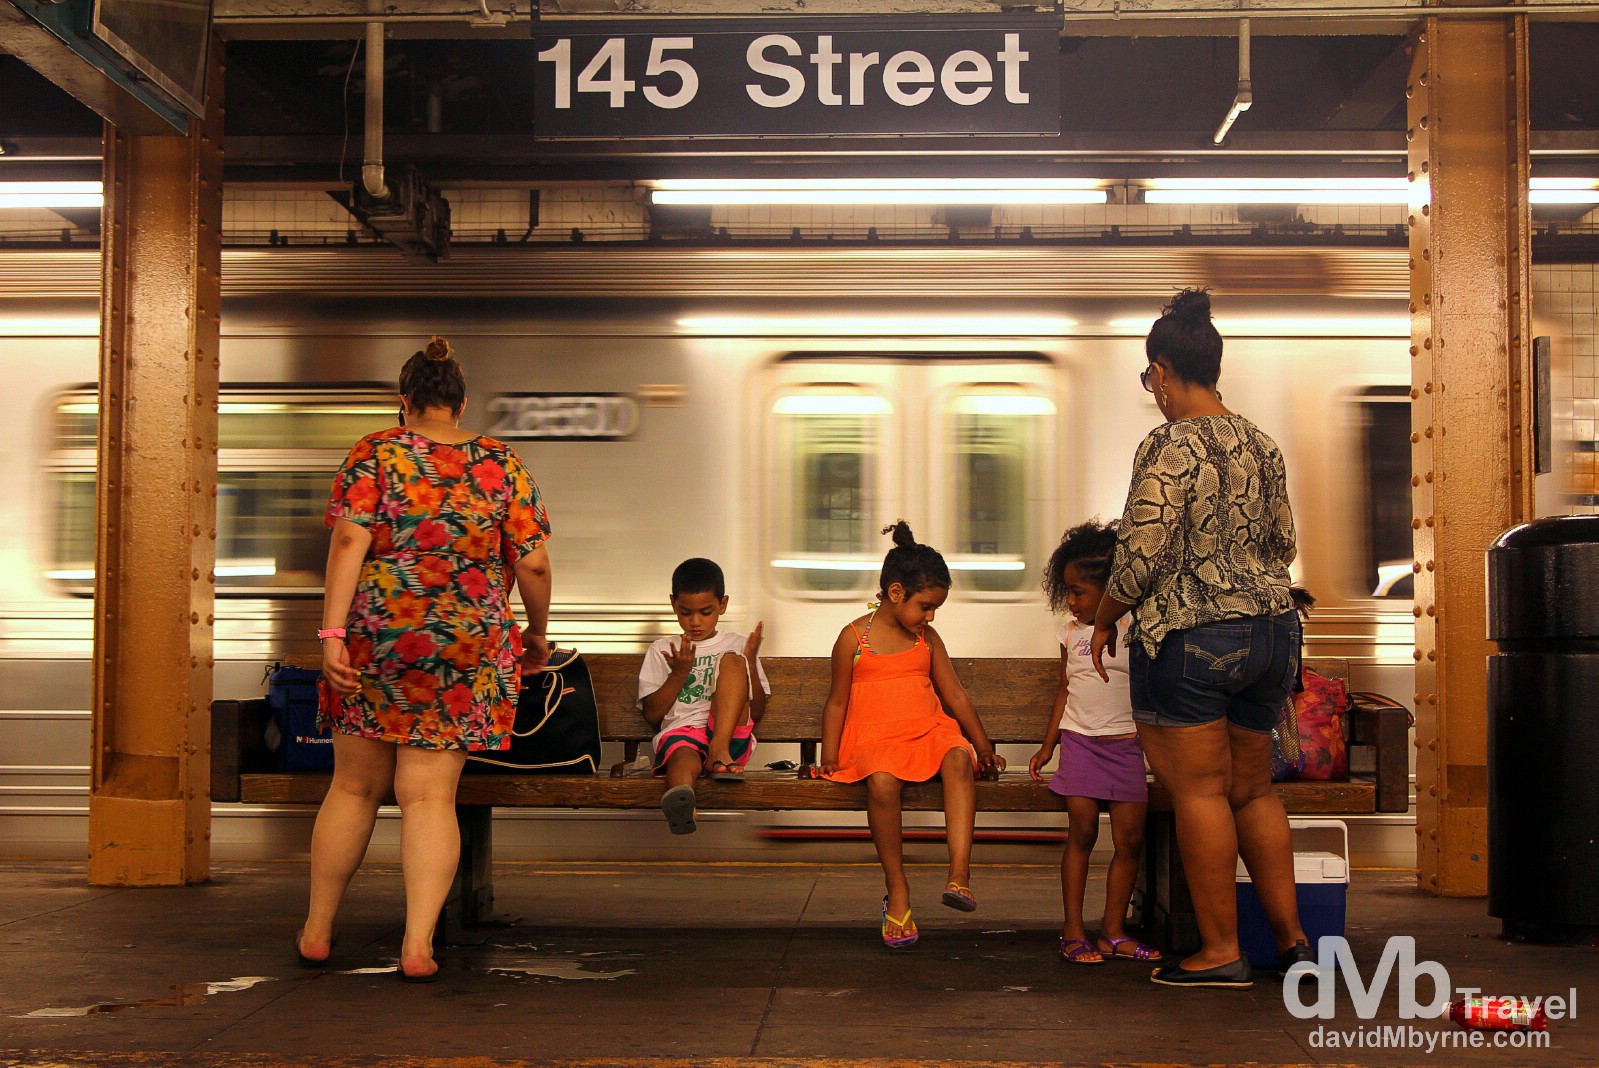 On the platform of 145 Street subway station, Manhattan, New York. July 14th 2013.